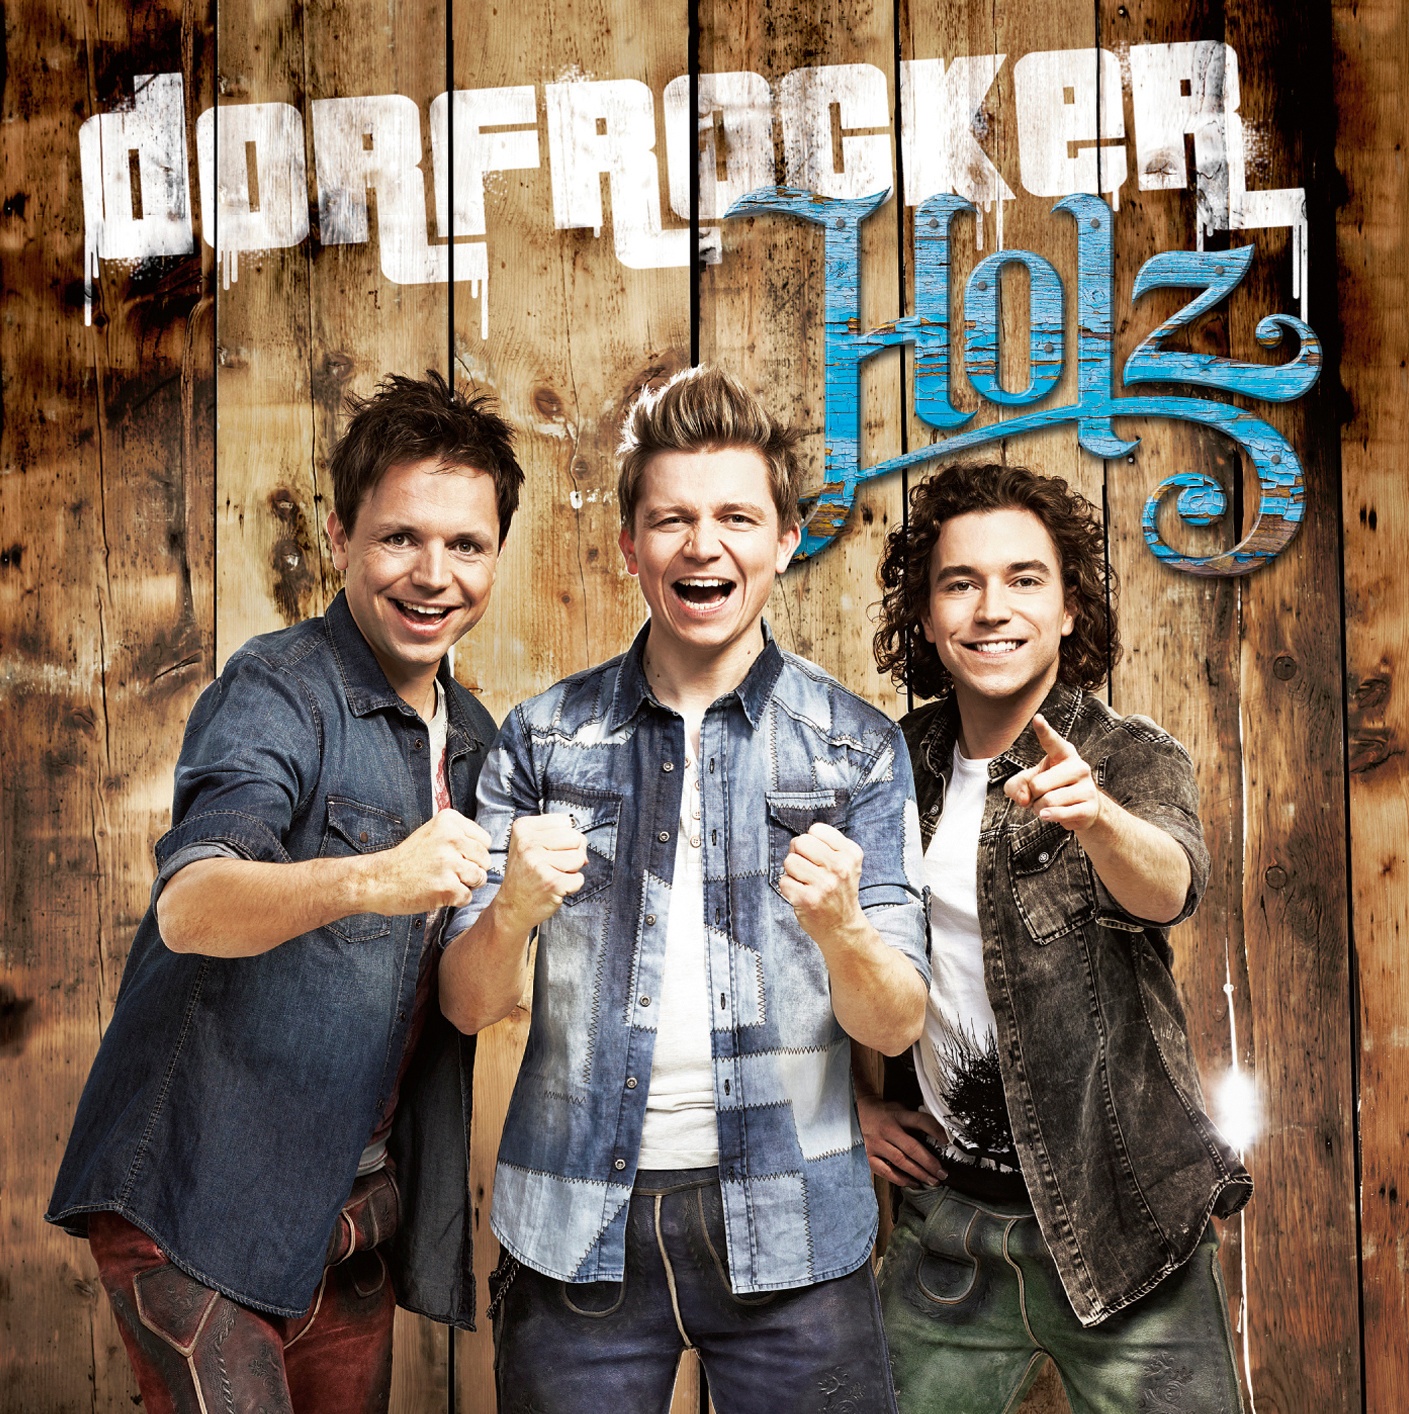 Holz - Dorfrocker. (CD)